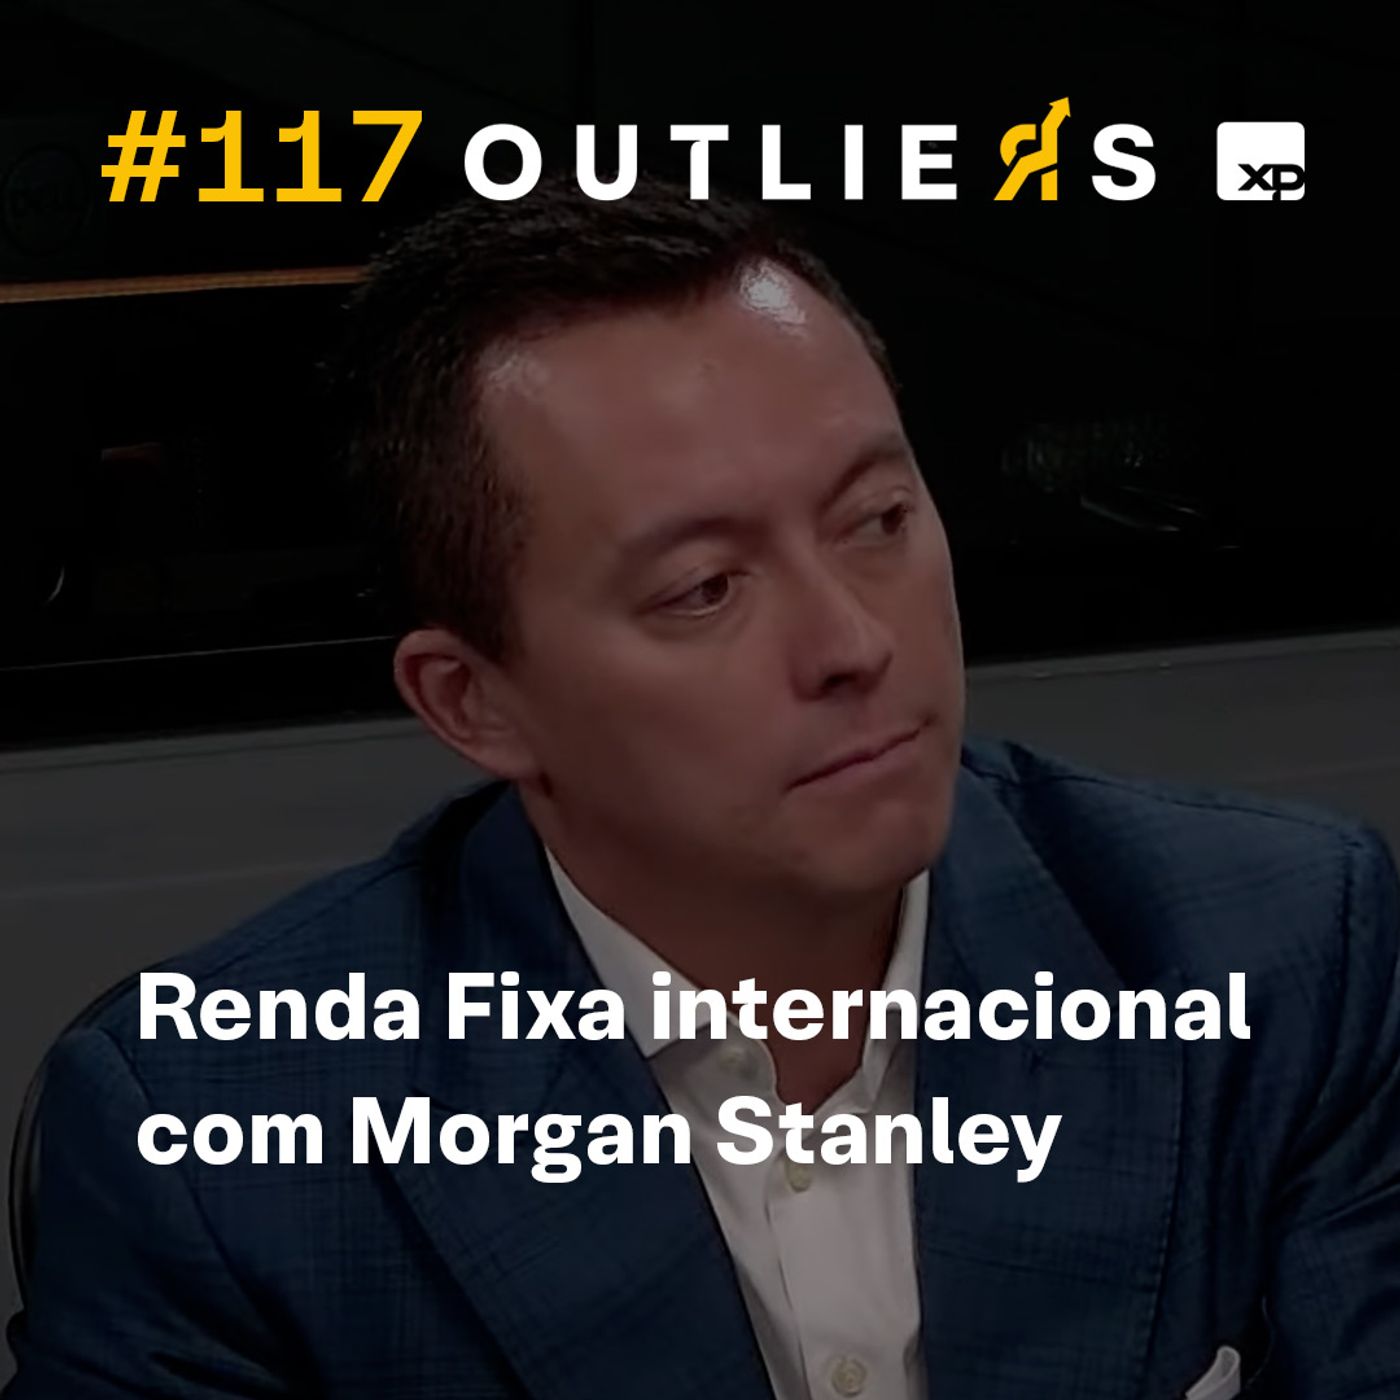 #117 - Renda fixa global com Morgan Stanley